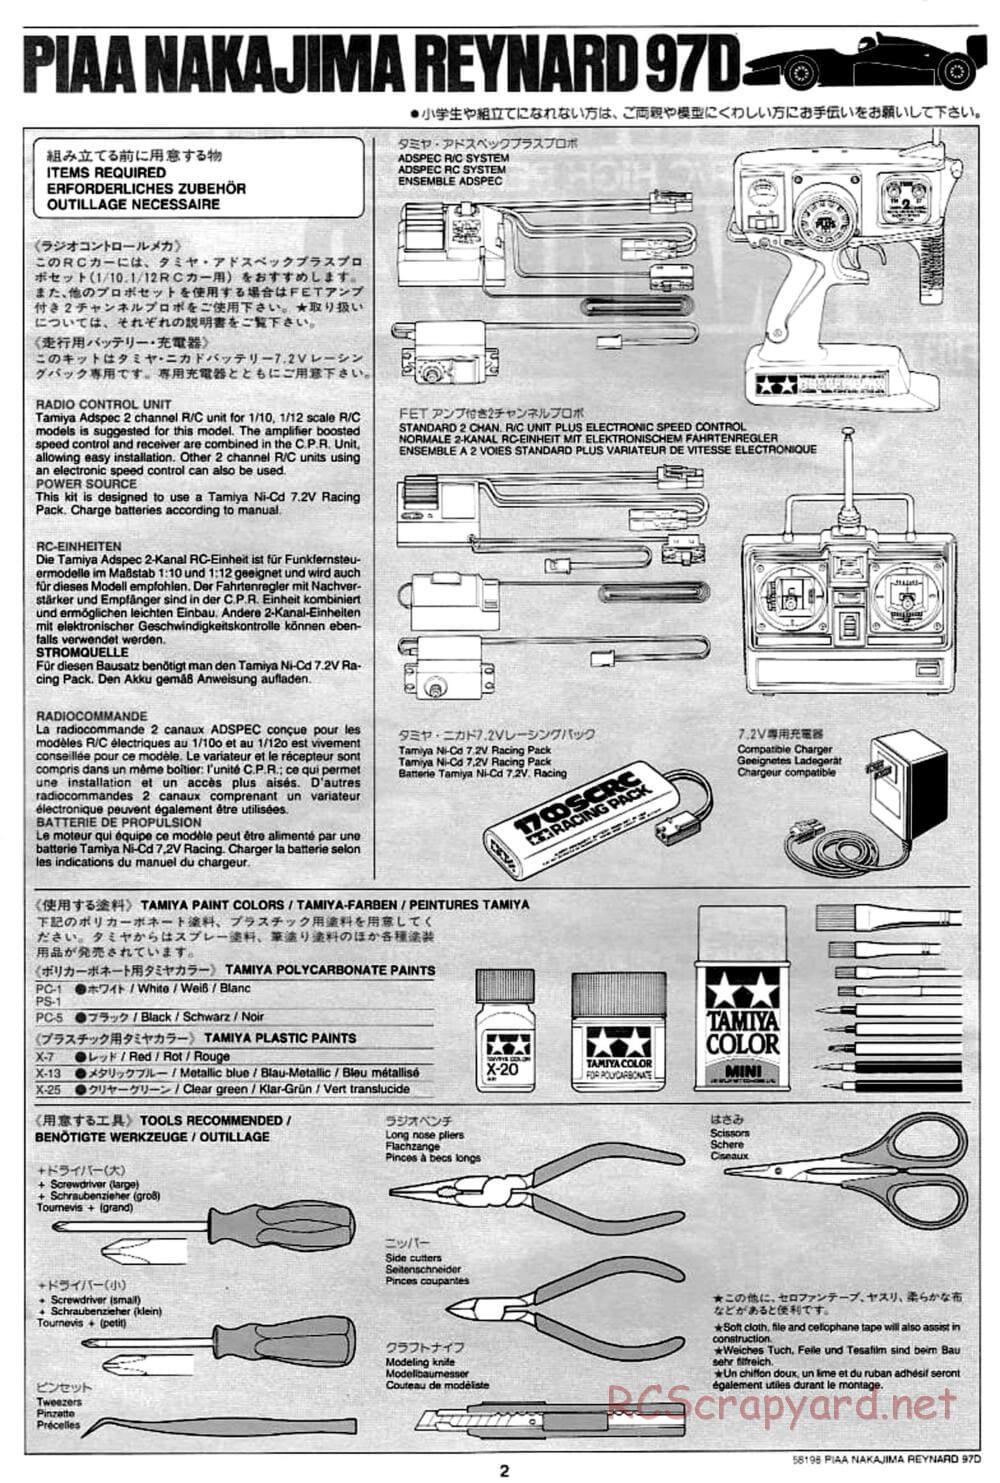 Tamiya - PIAA Nakajima Reynard 97D - F103 Chassis - Manuale - Page 2